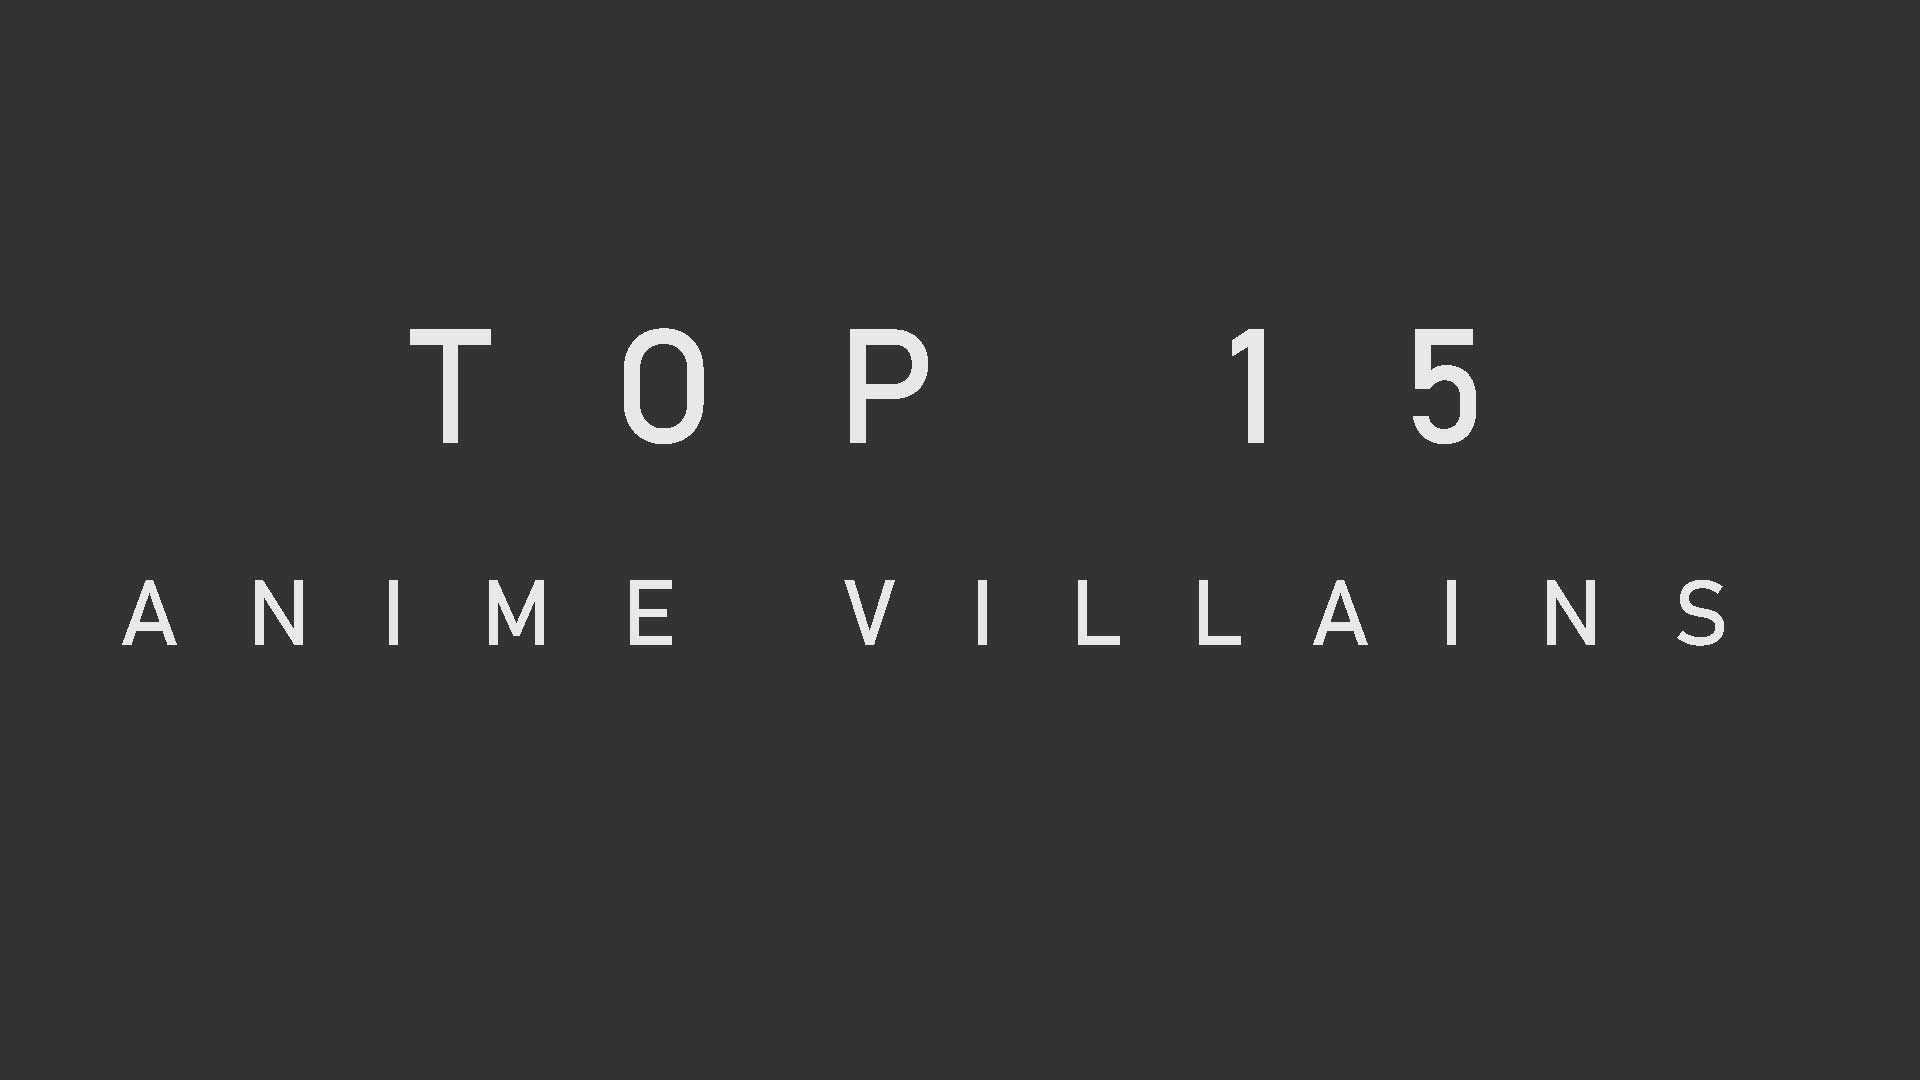 TOP-15-ANIME-VILLAINS